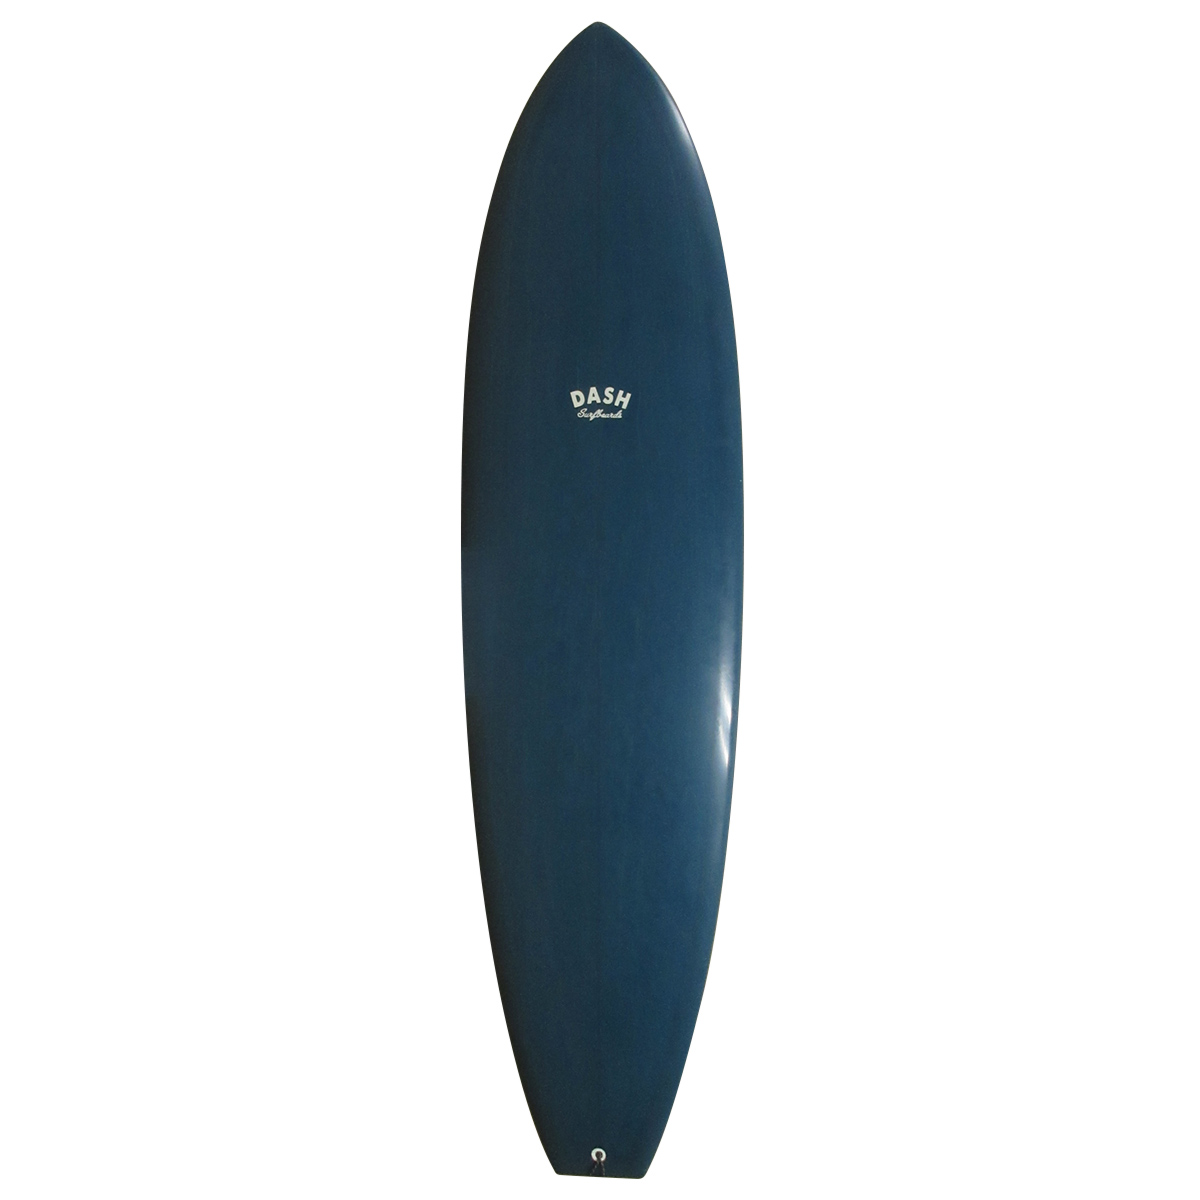  / DASH SURFBOARDS / SWAN 7`2